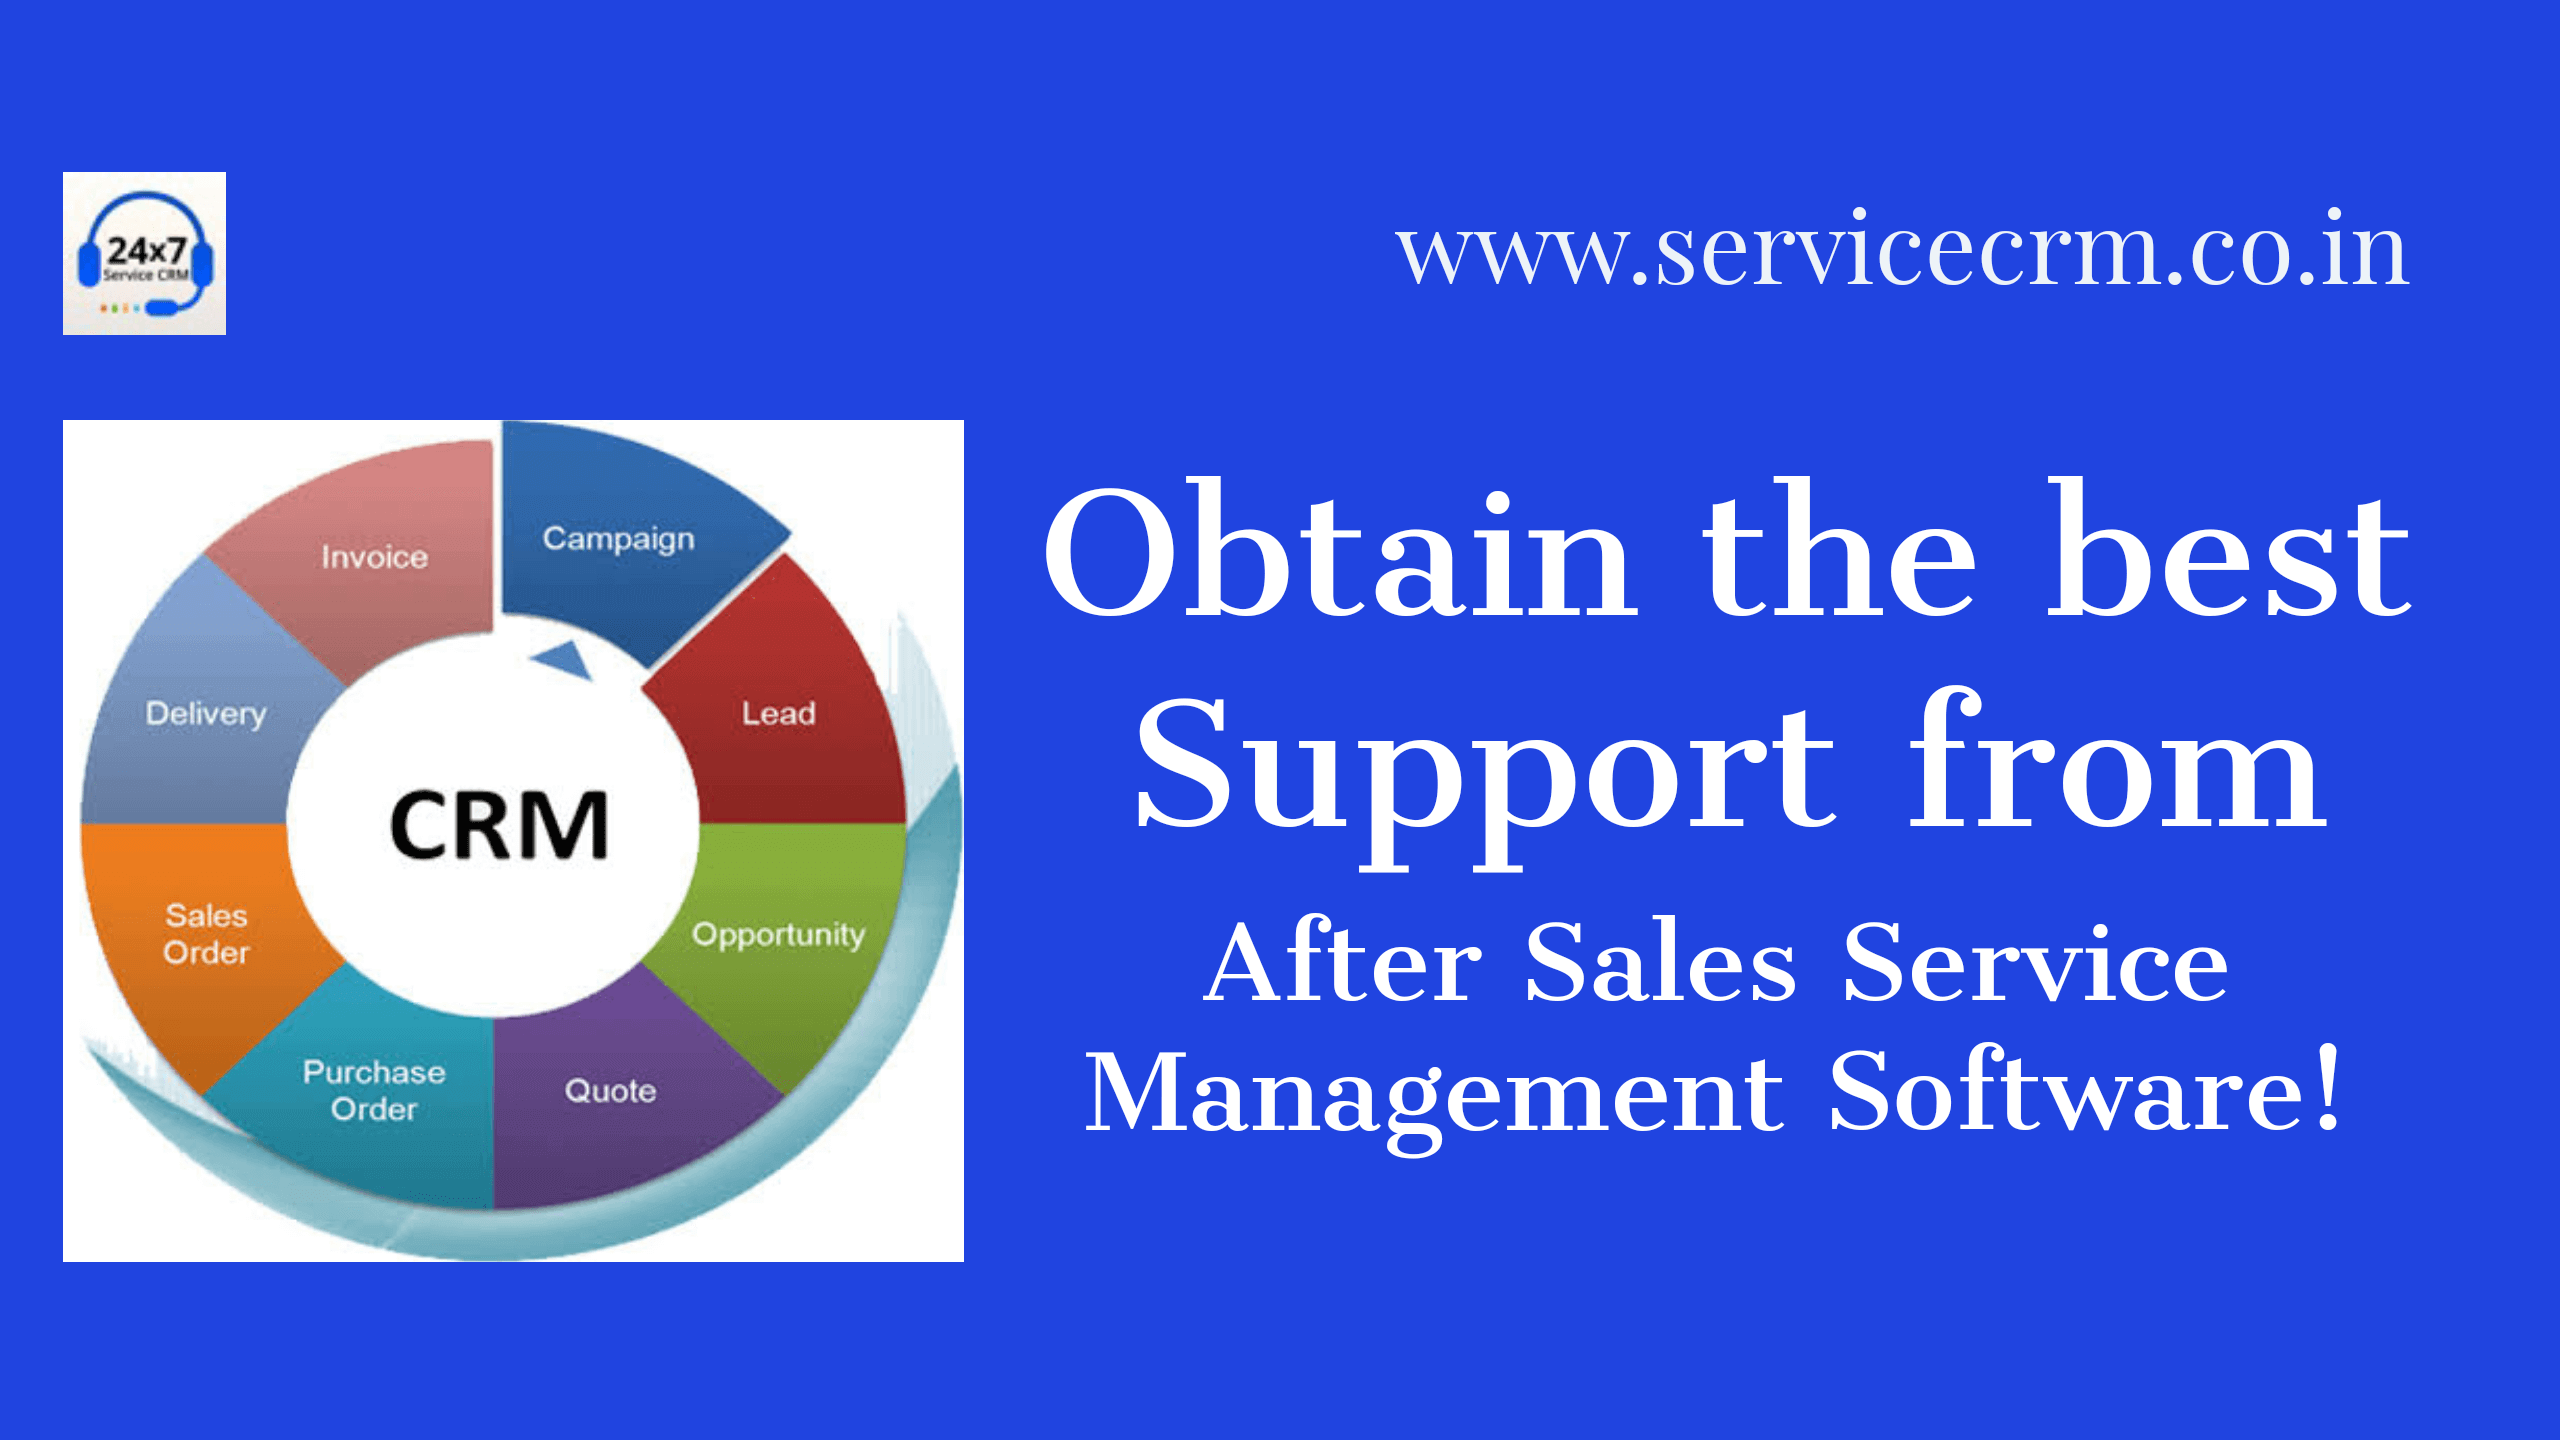 After Sales Customer Service Management Software Service CRM